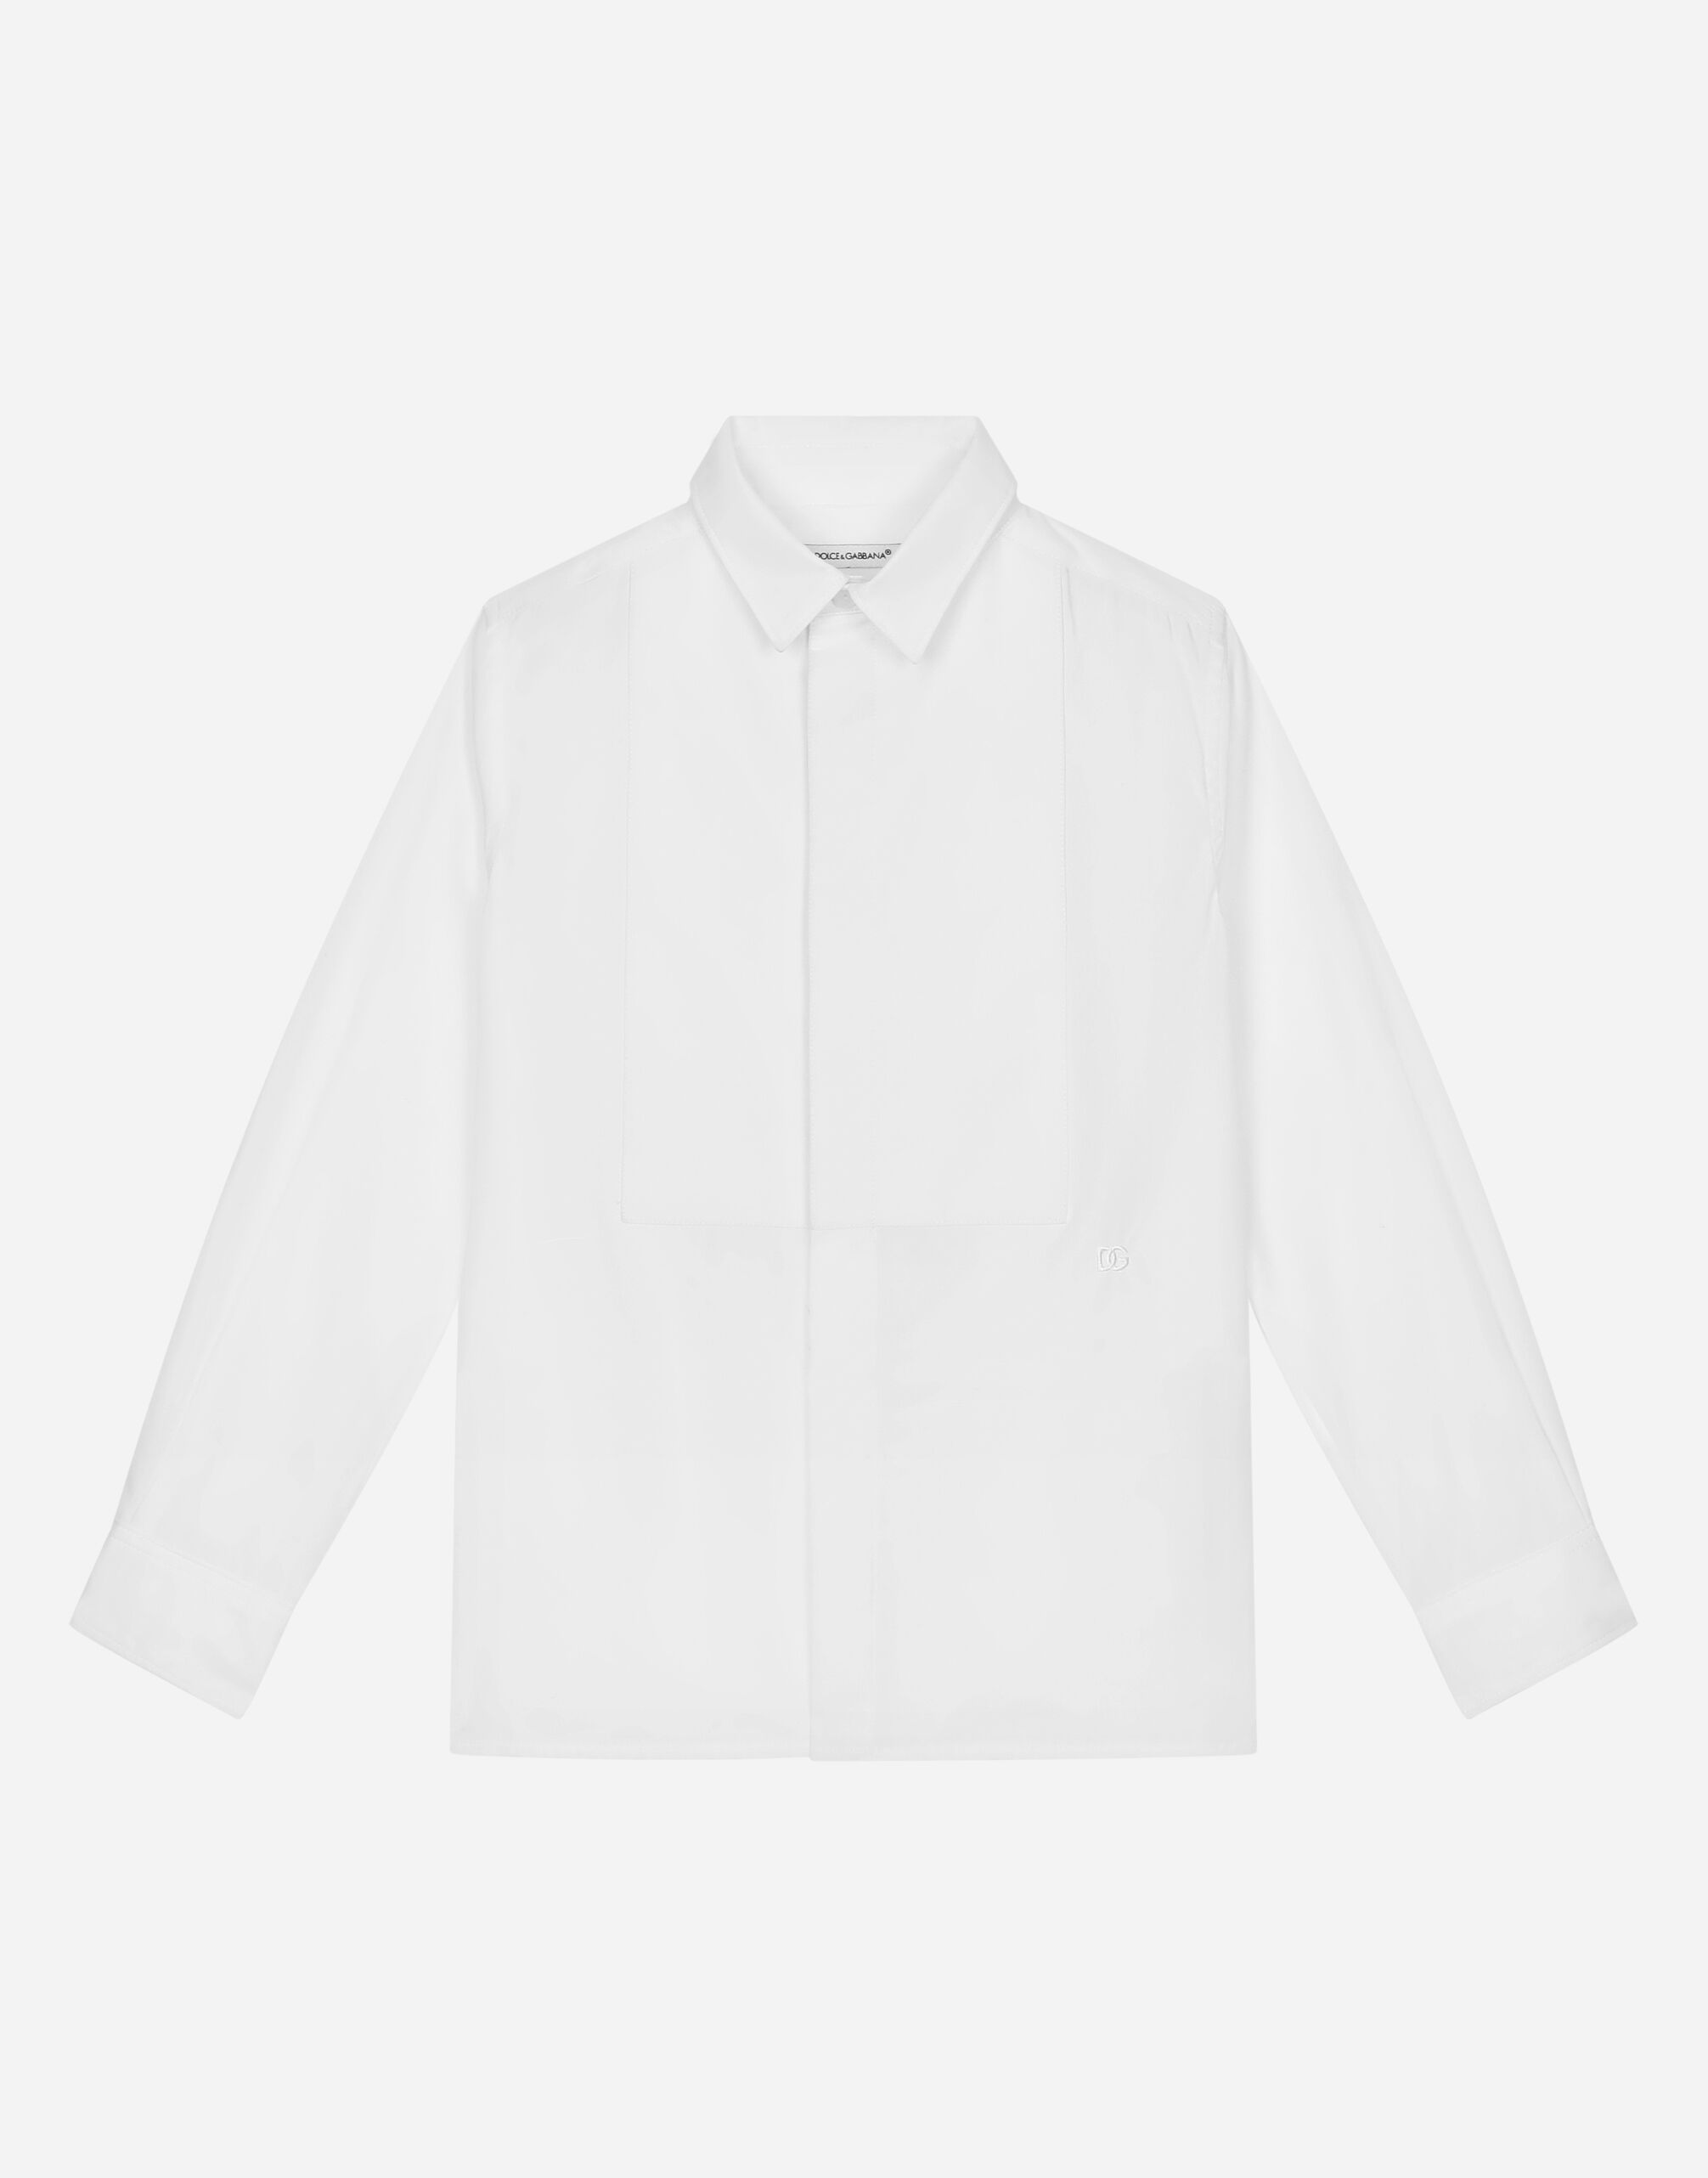 Dolce & Gabbana Poplin jacquard tuxedo shirt with DG logo White L43S76G7I8X